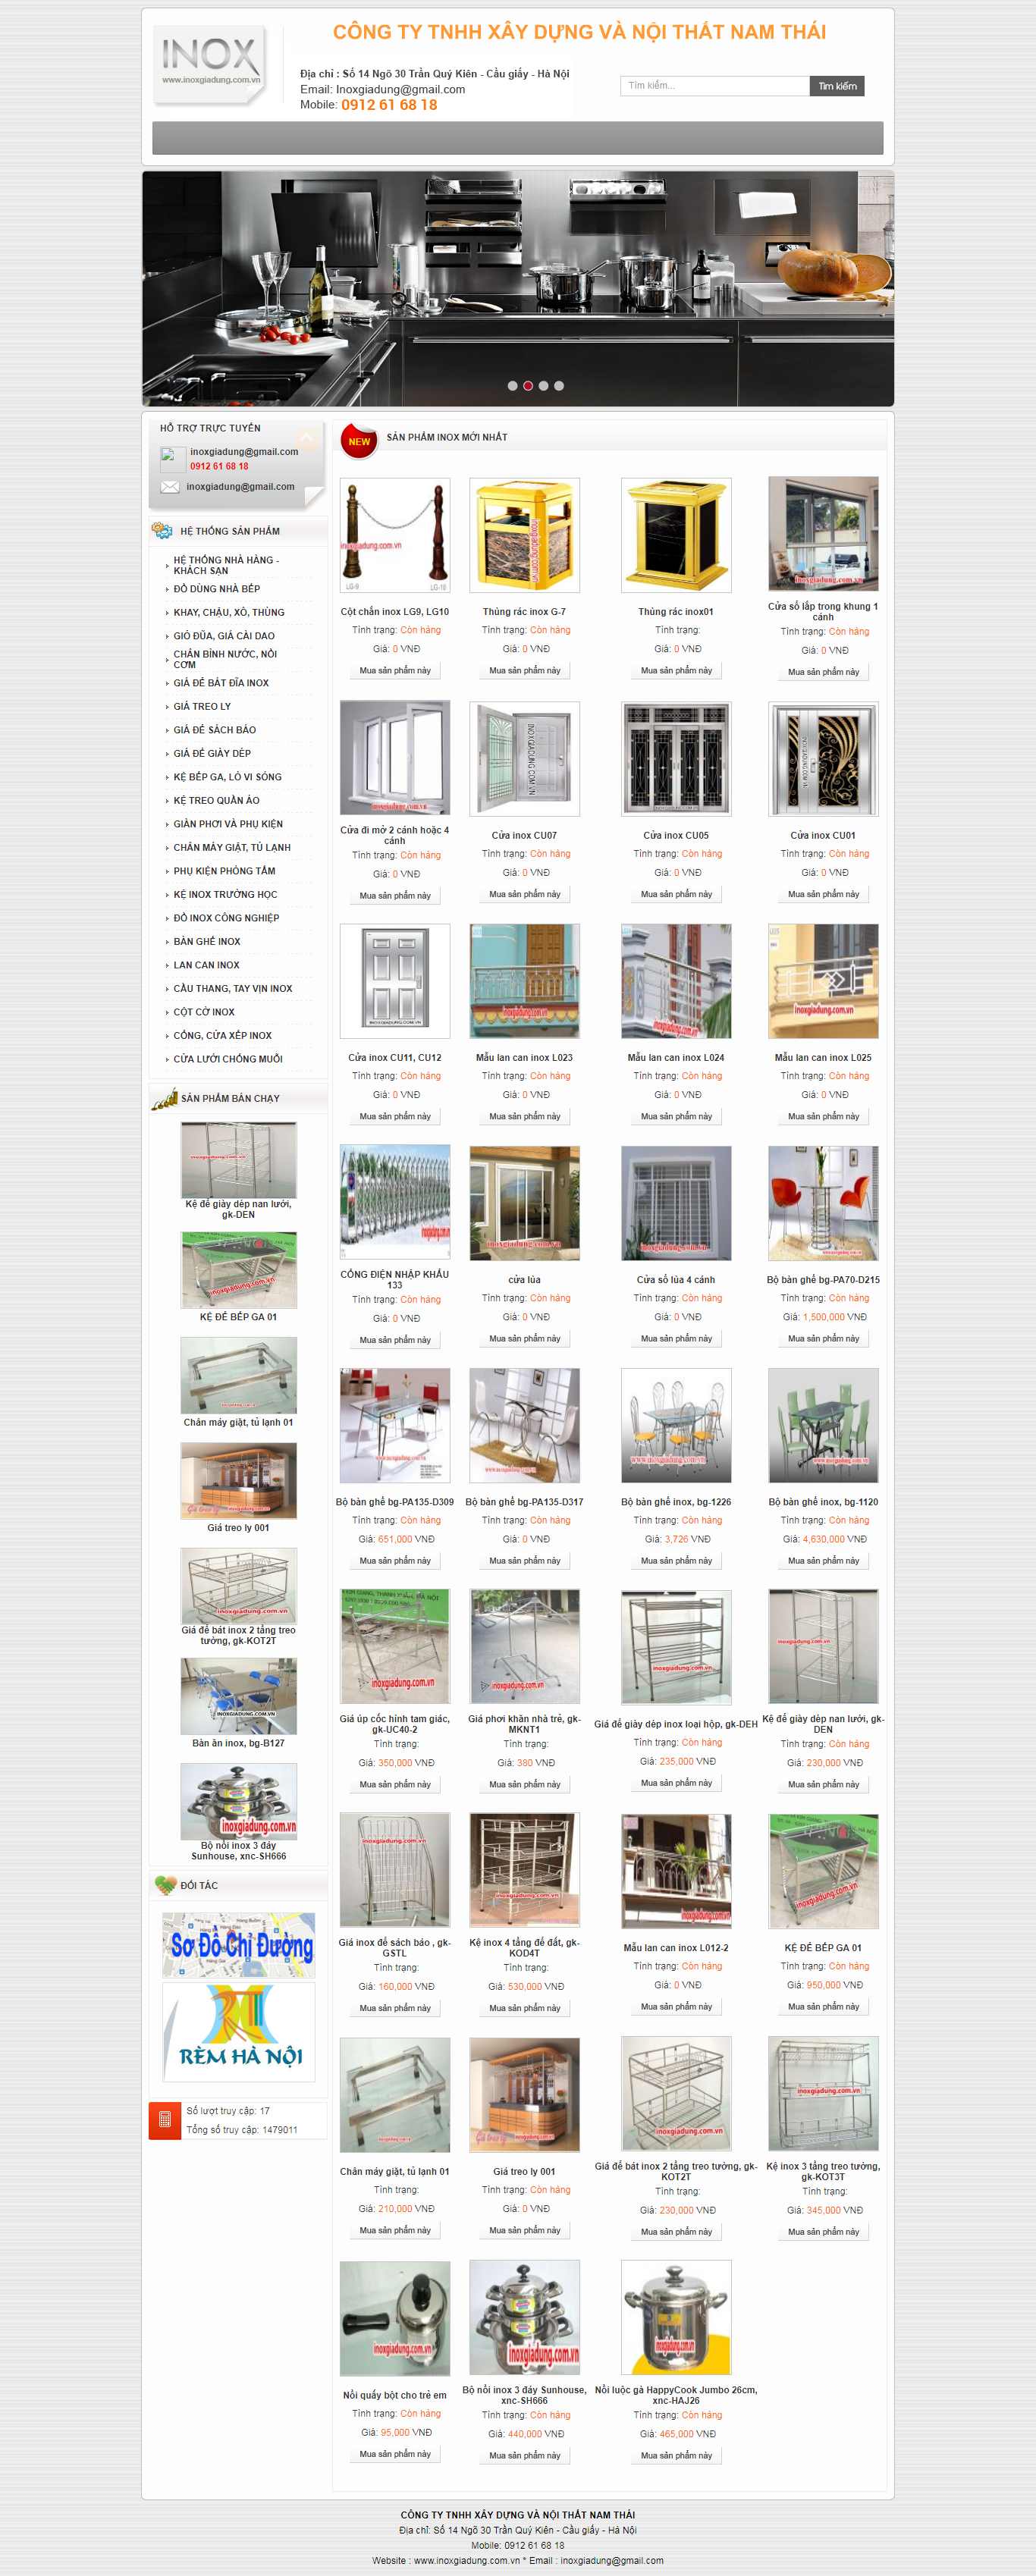 Thiết kế Website đồ dùng inox - www.inoxgiadung.com.vn